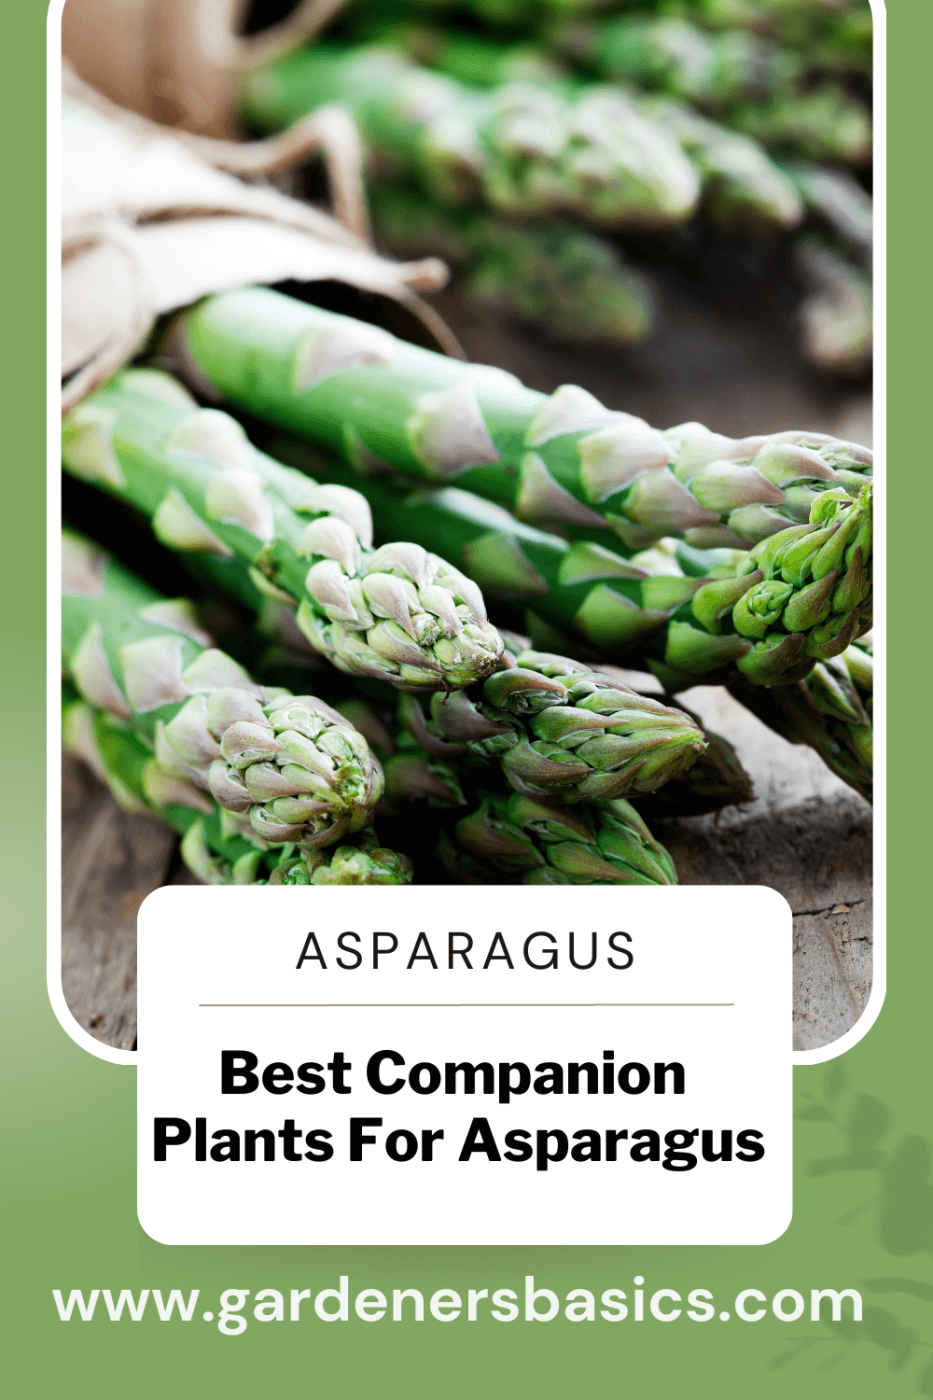 Best Companion Plants for Asparagus